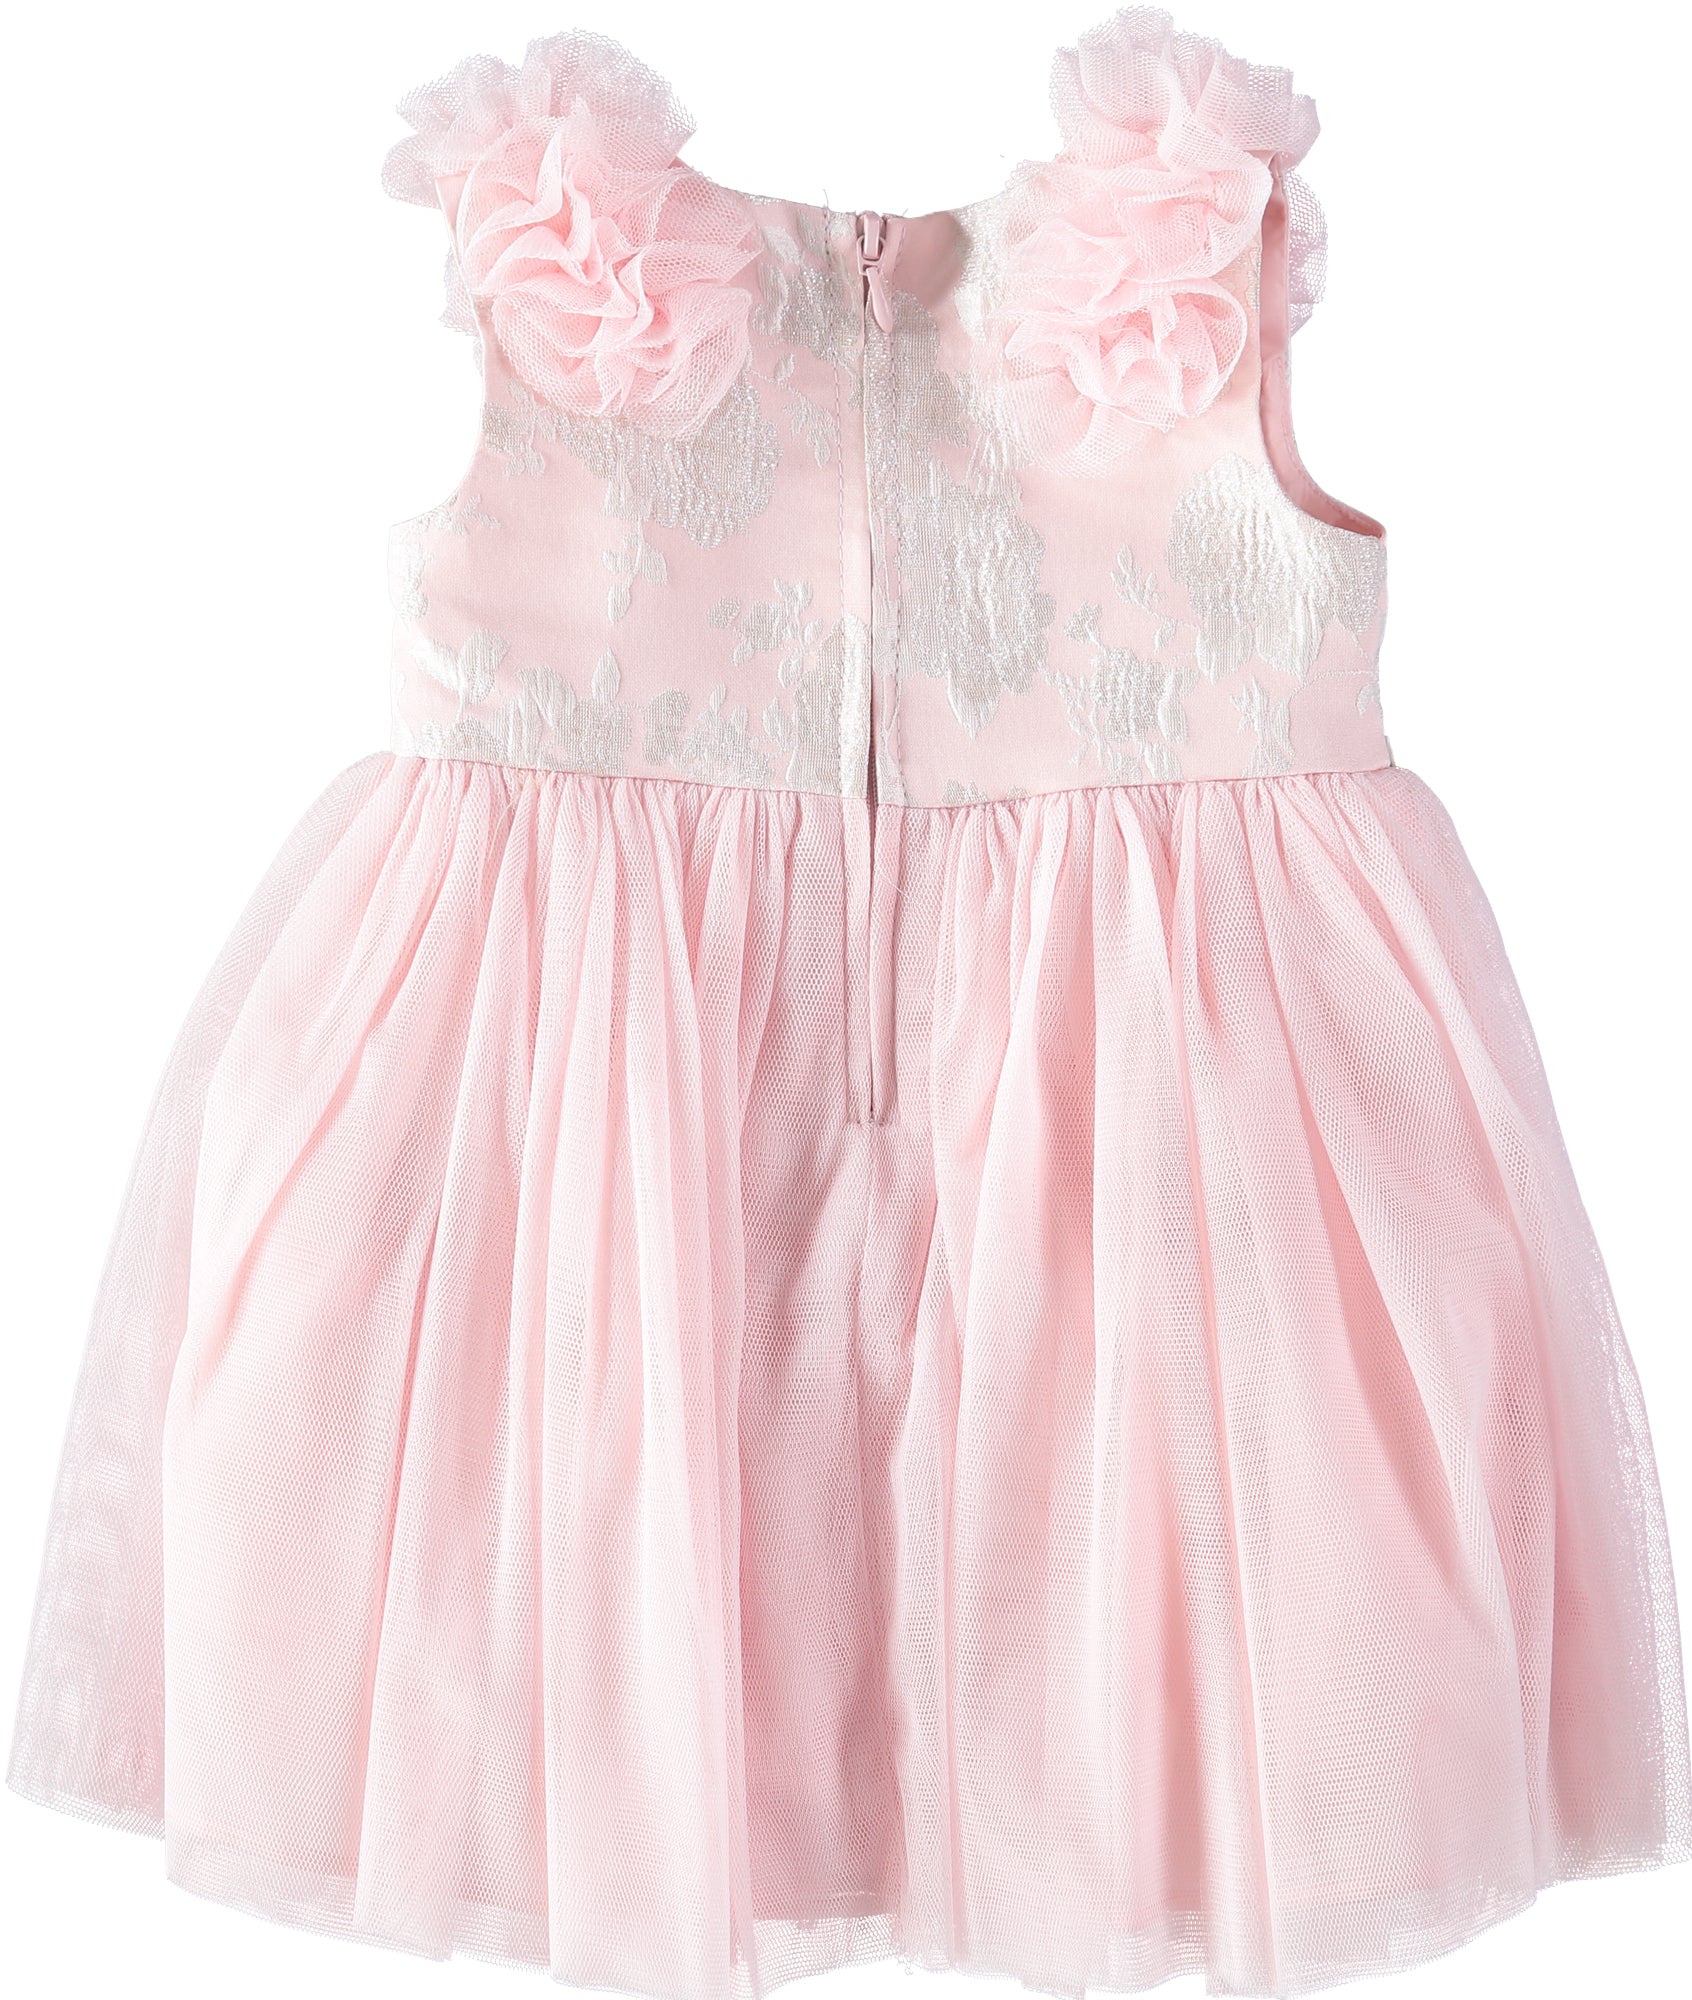 Bonnie Baby Girls 12-24 Months Jacquard Mesh Dress